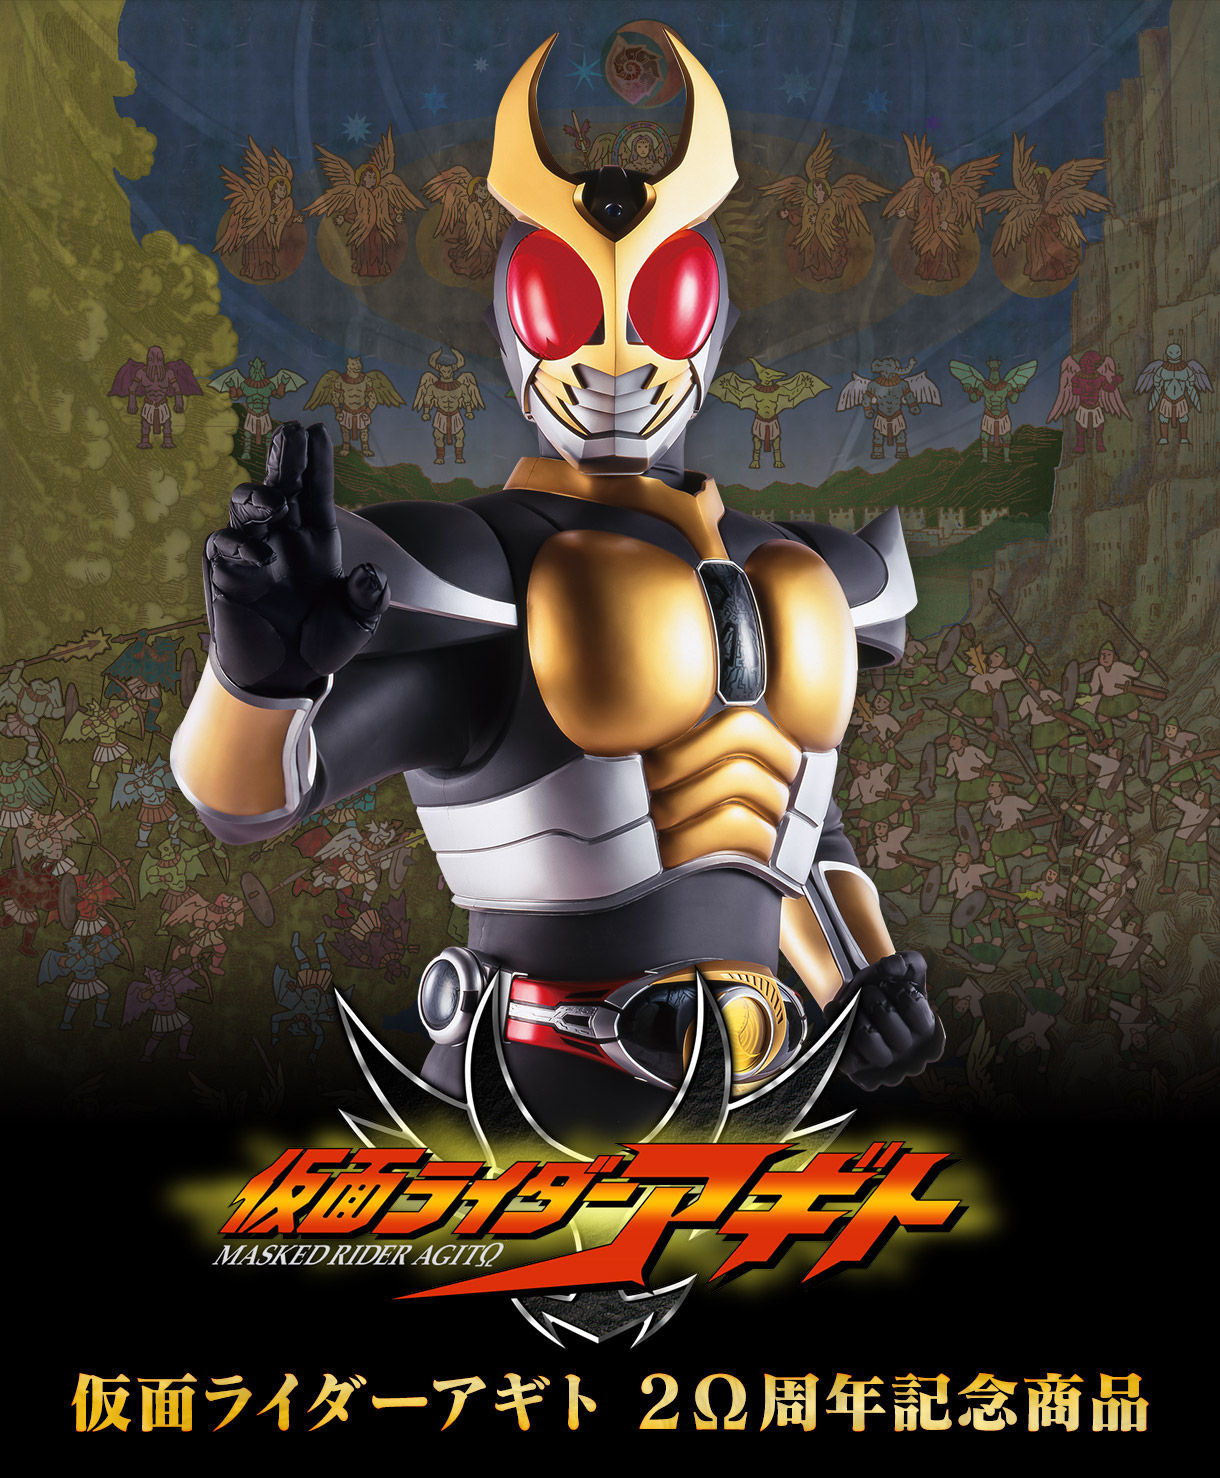 Complete Selection Modification Masked Kamen Rider Agito Altering CSM PRESALE